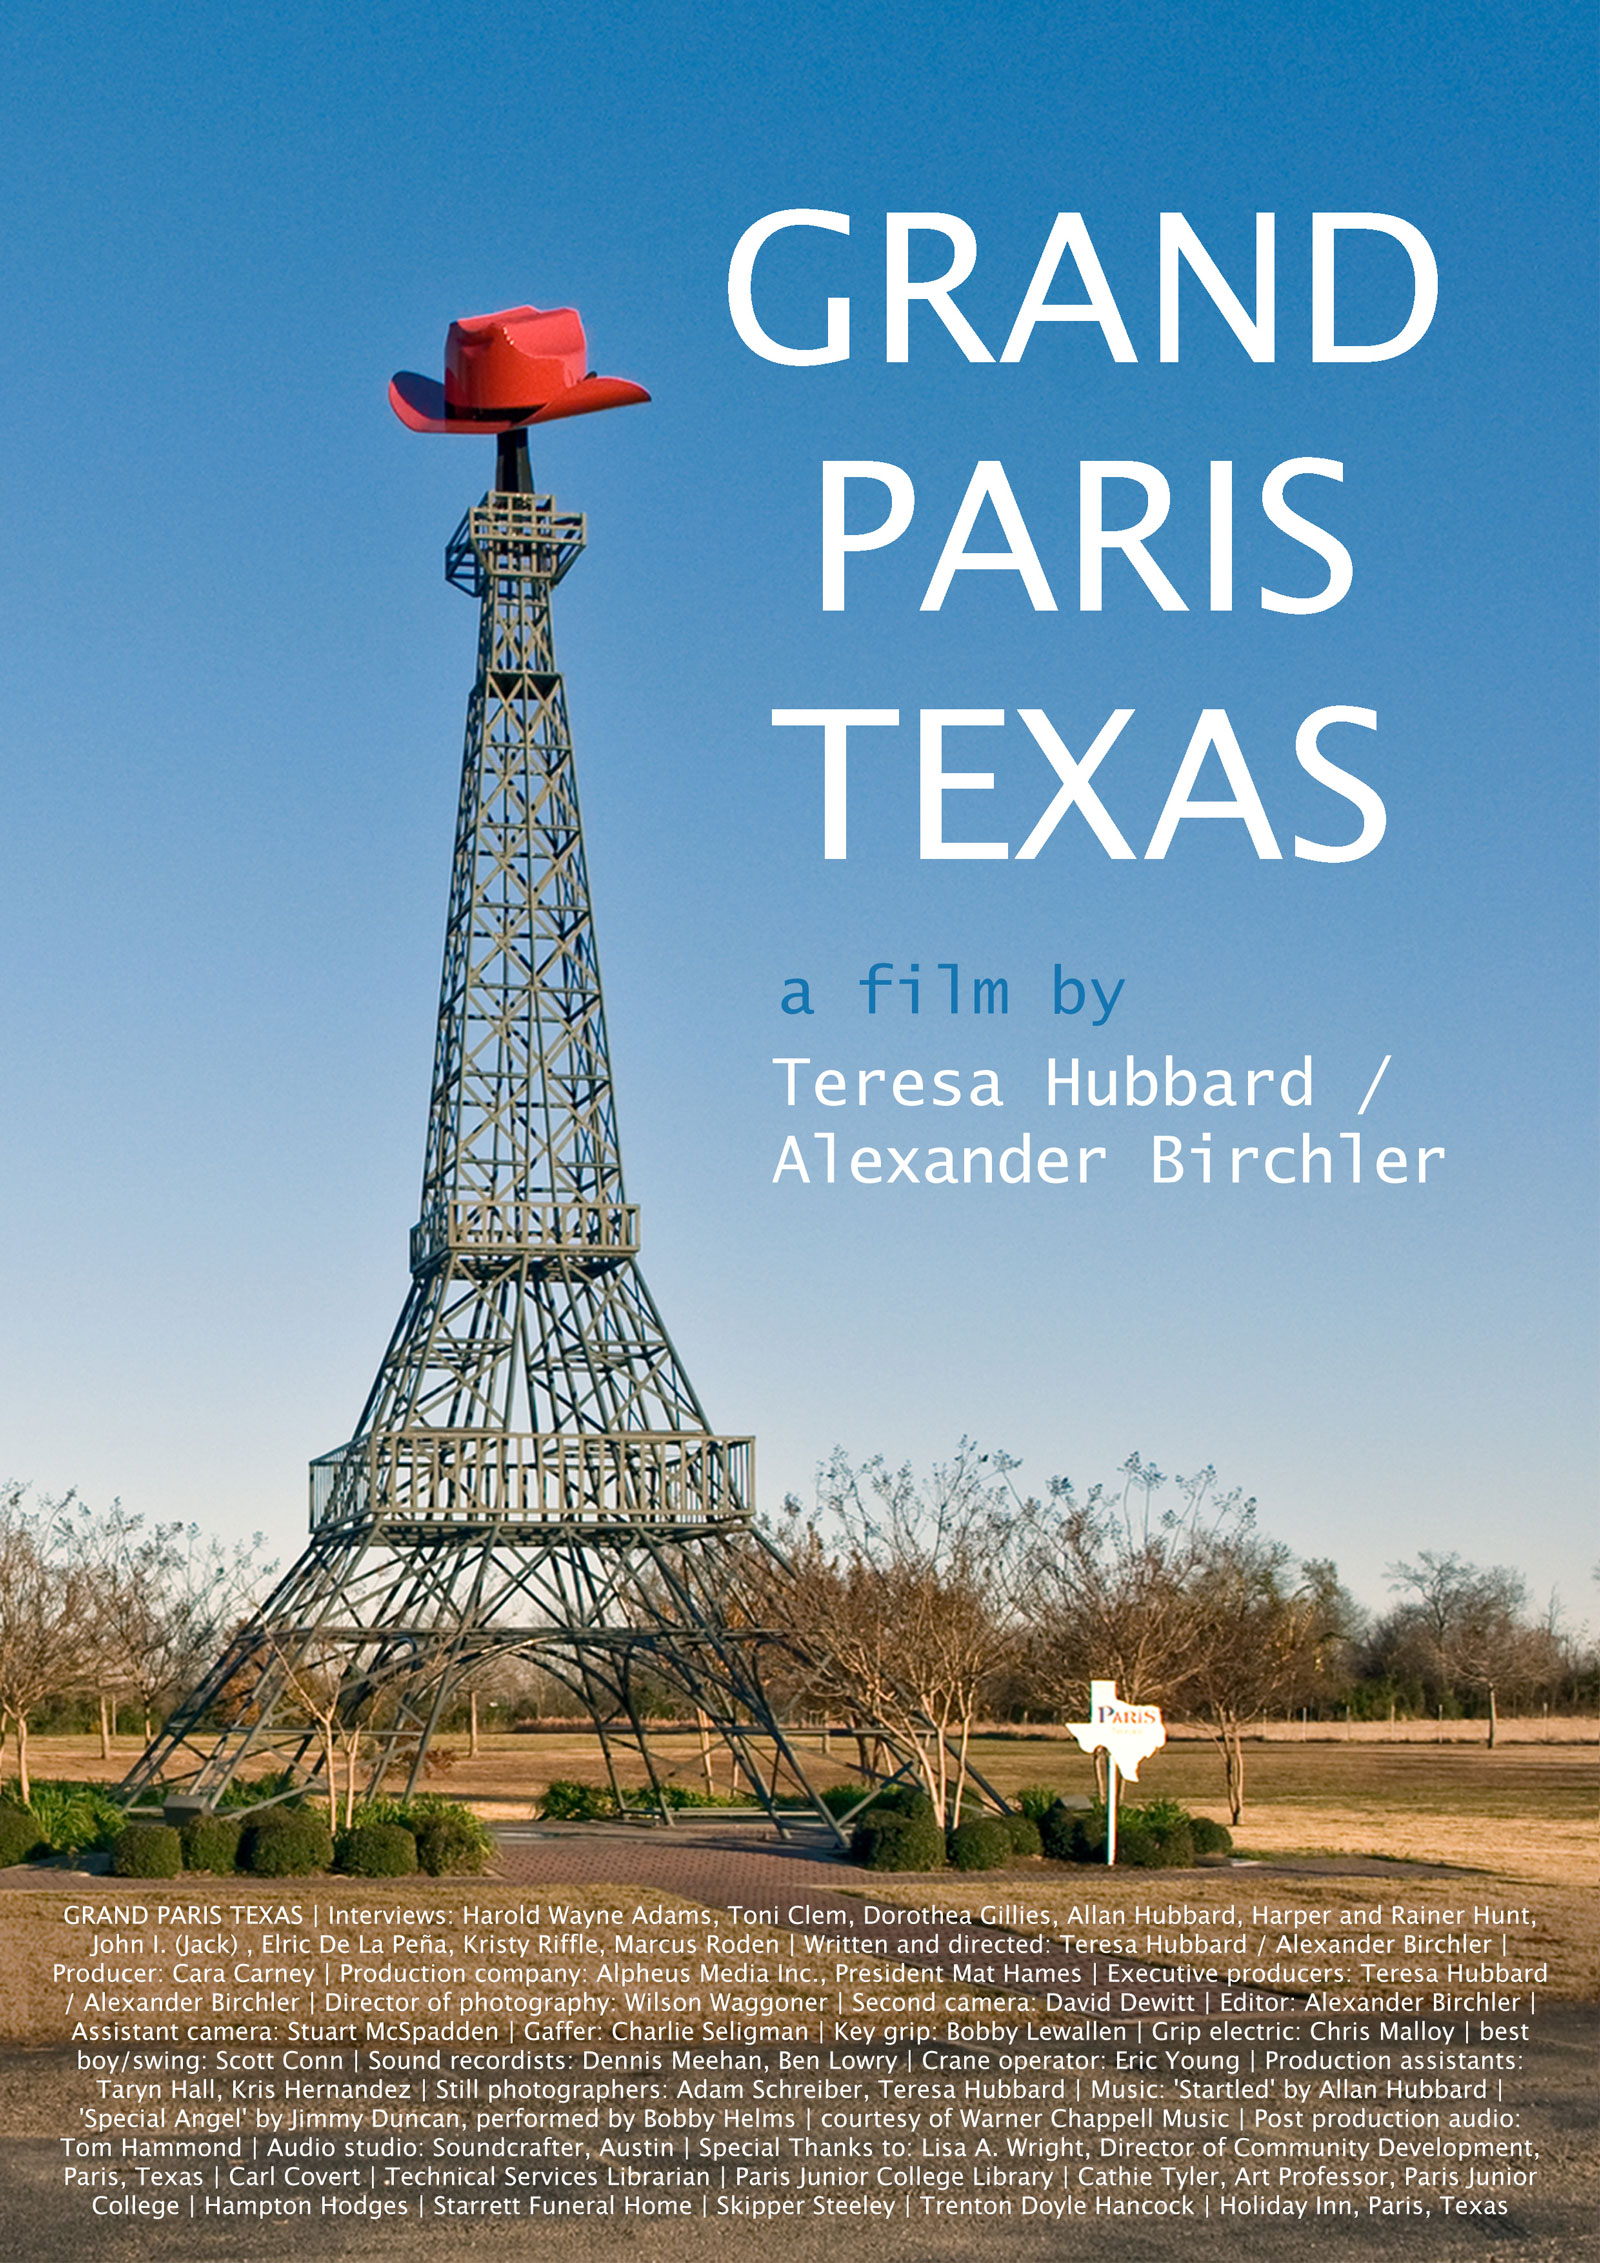 Teresa Hubbard / Alexander Birchler, Grand Paris Texas, 2009